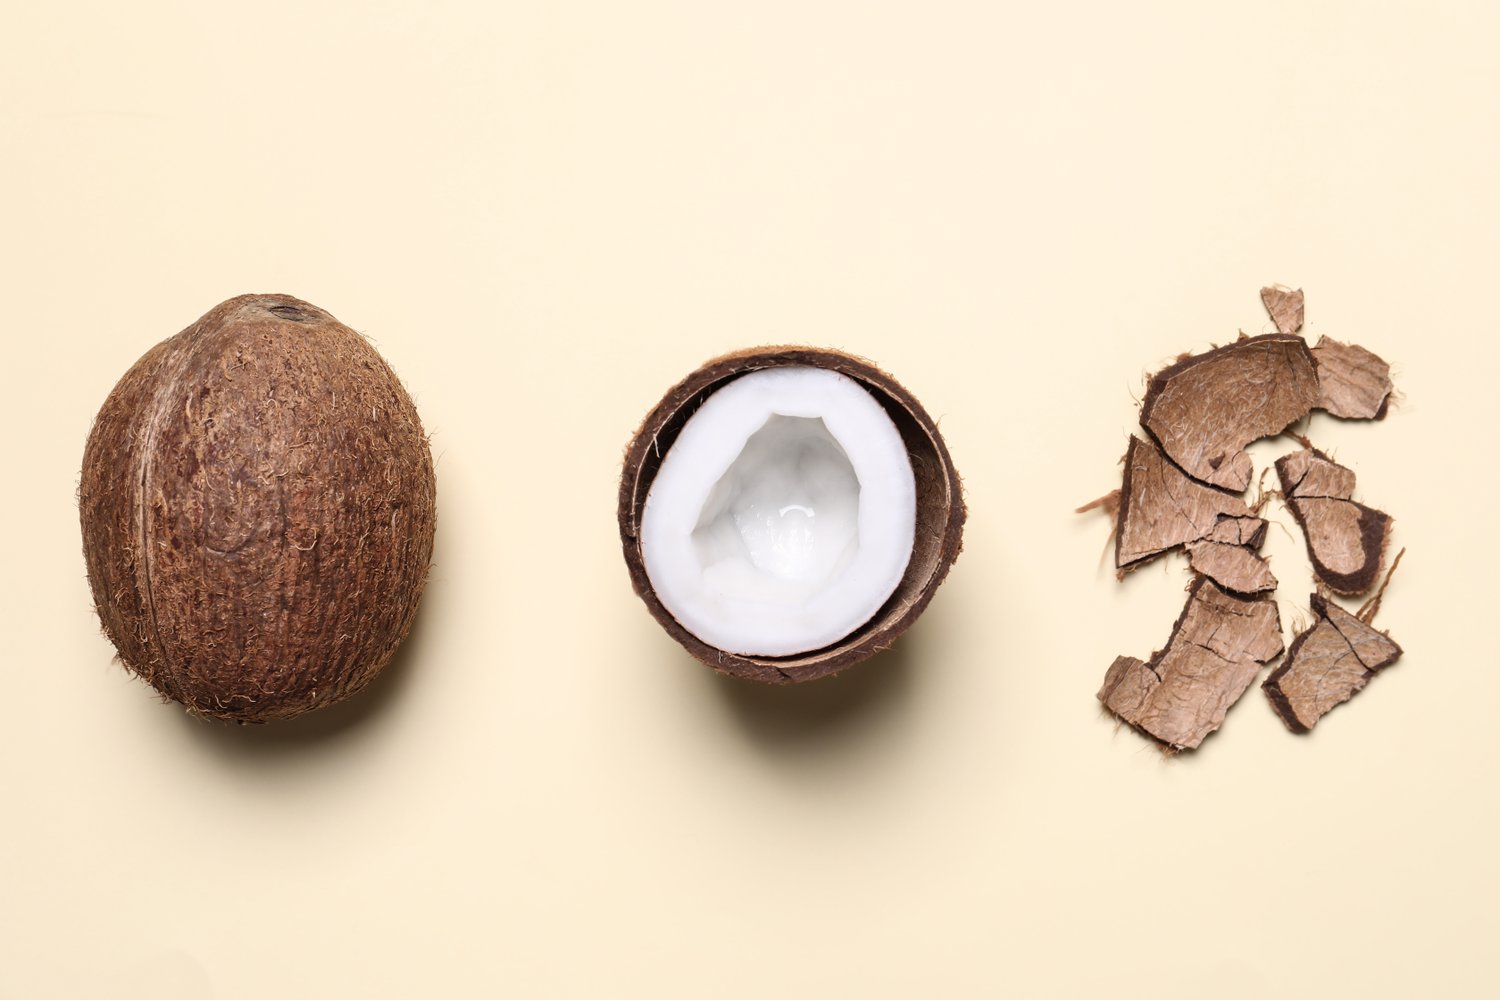 Amazing coconuts